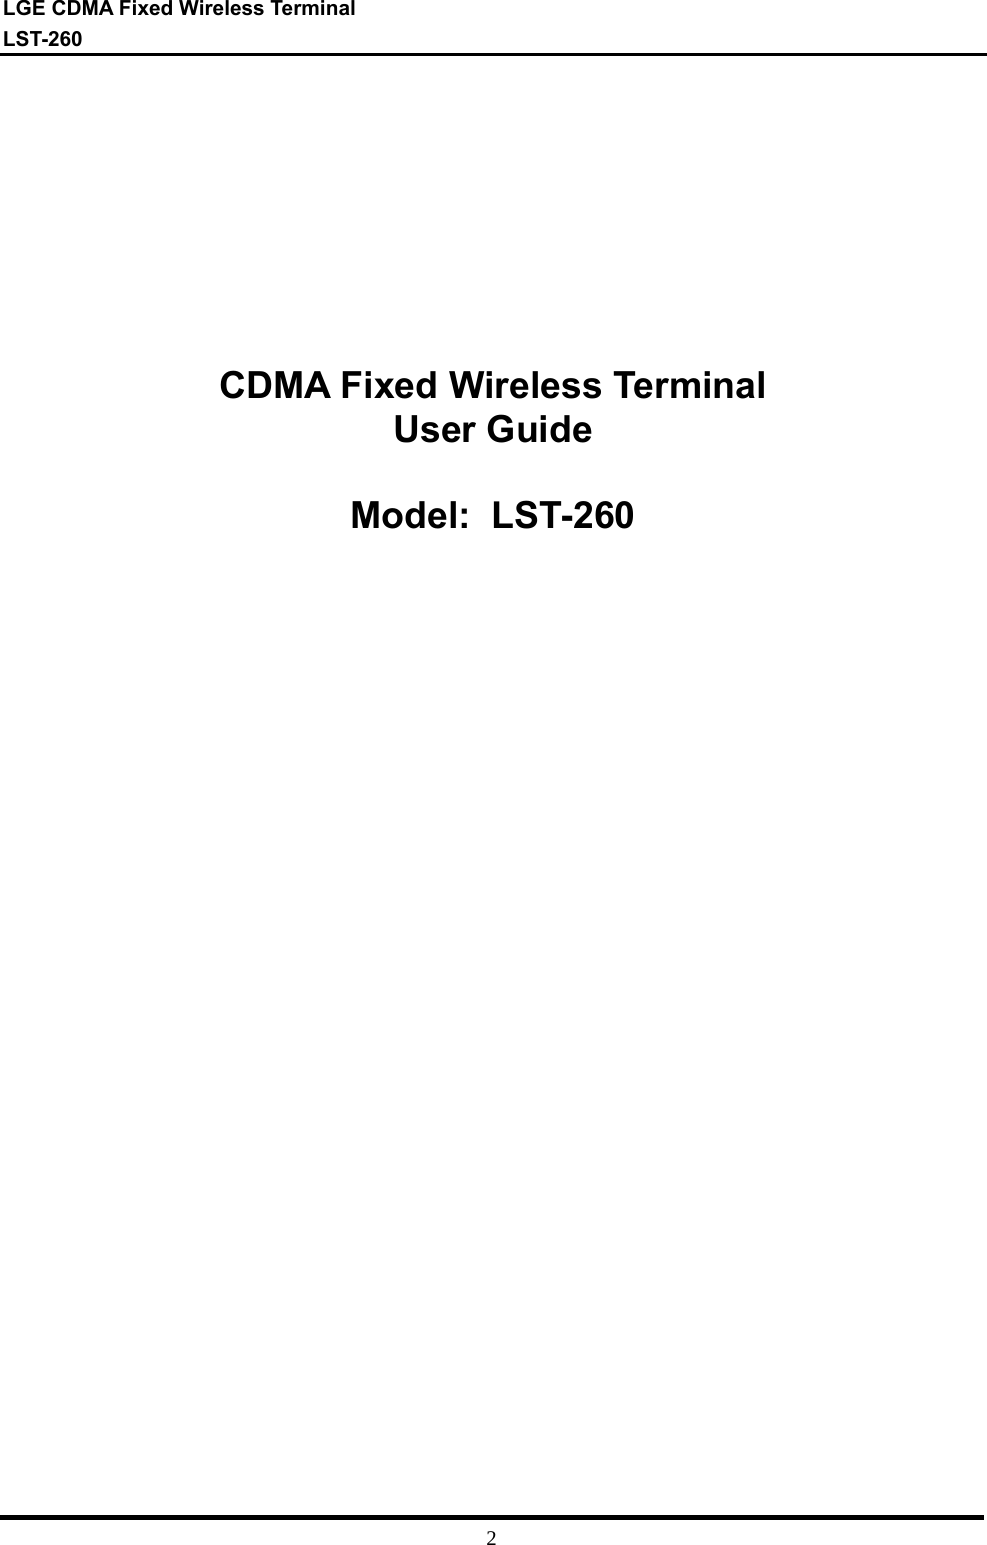 LGE CDMA Fixed Wireless Terminal LST-260         2          CDMA Fixed Wireless Terminal User Guide  Model:  LST-260                                          